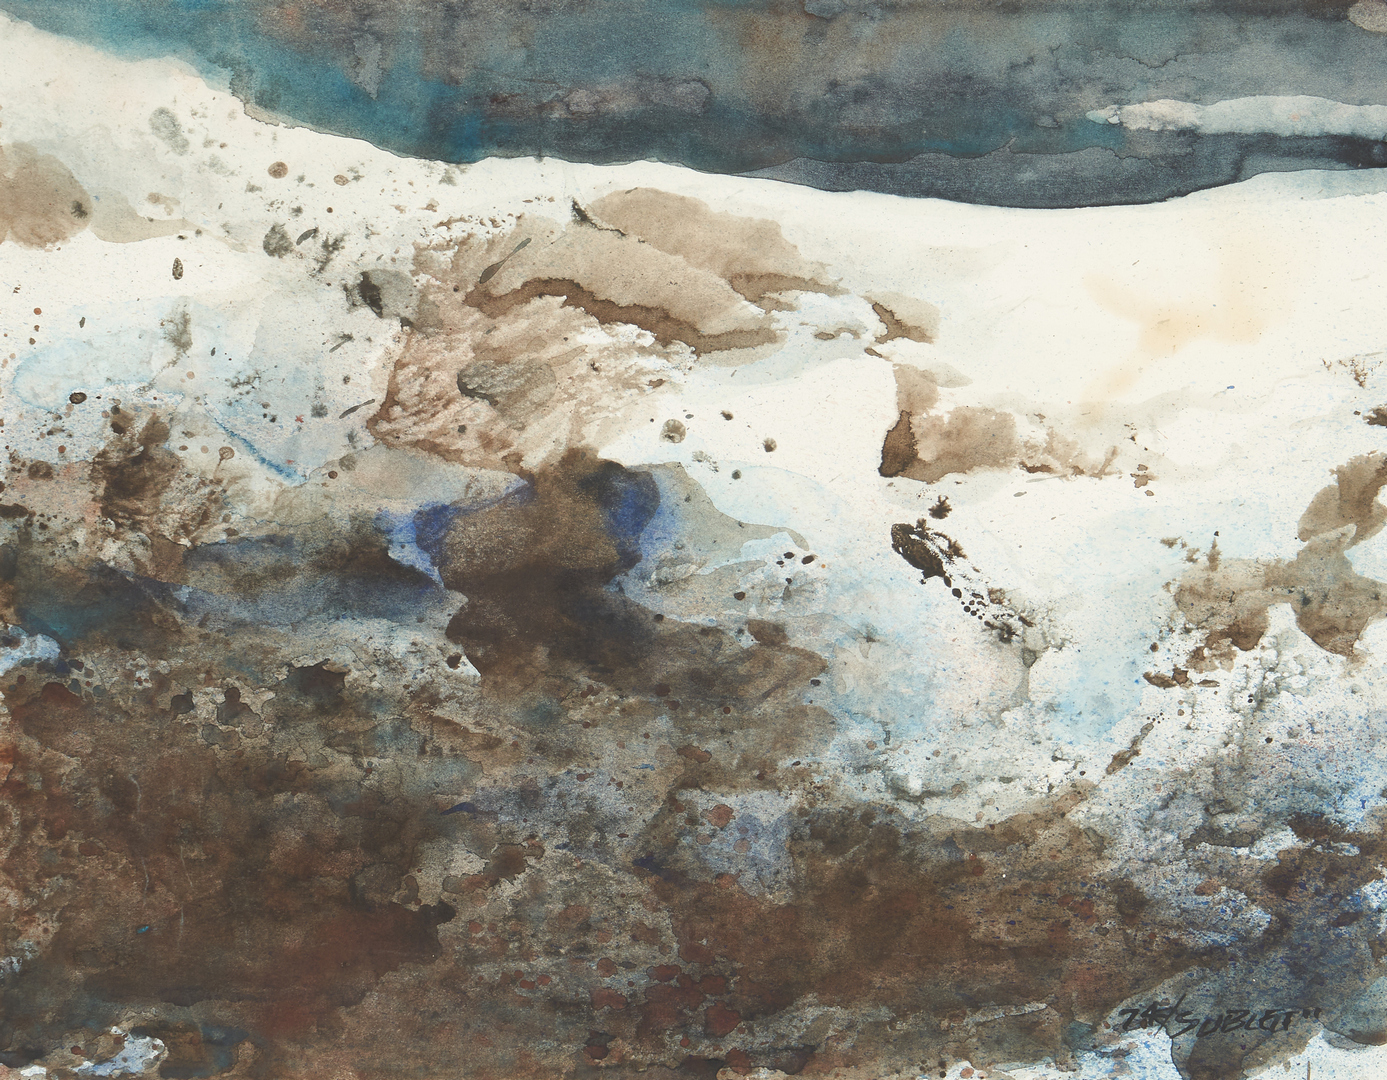 Lot 167: 2 Carl Sublett Watercolors, Hill Tree & Winter Mountain